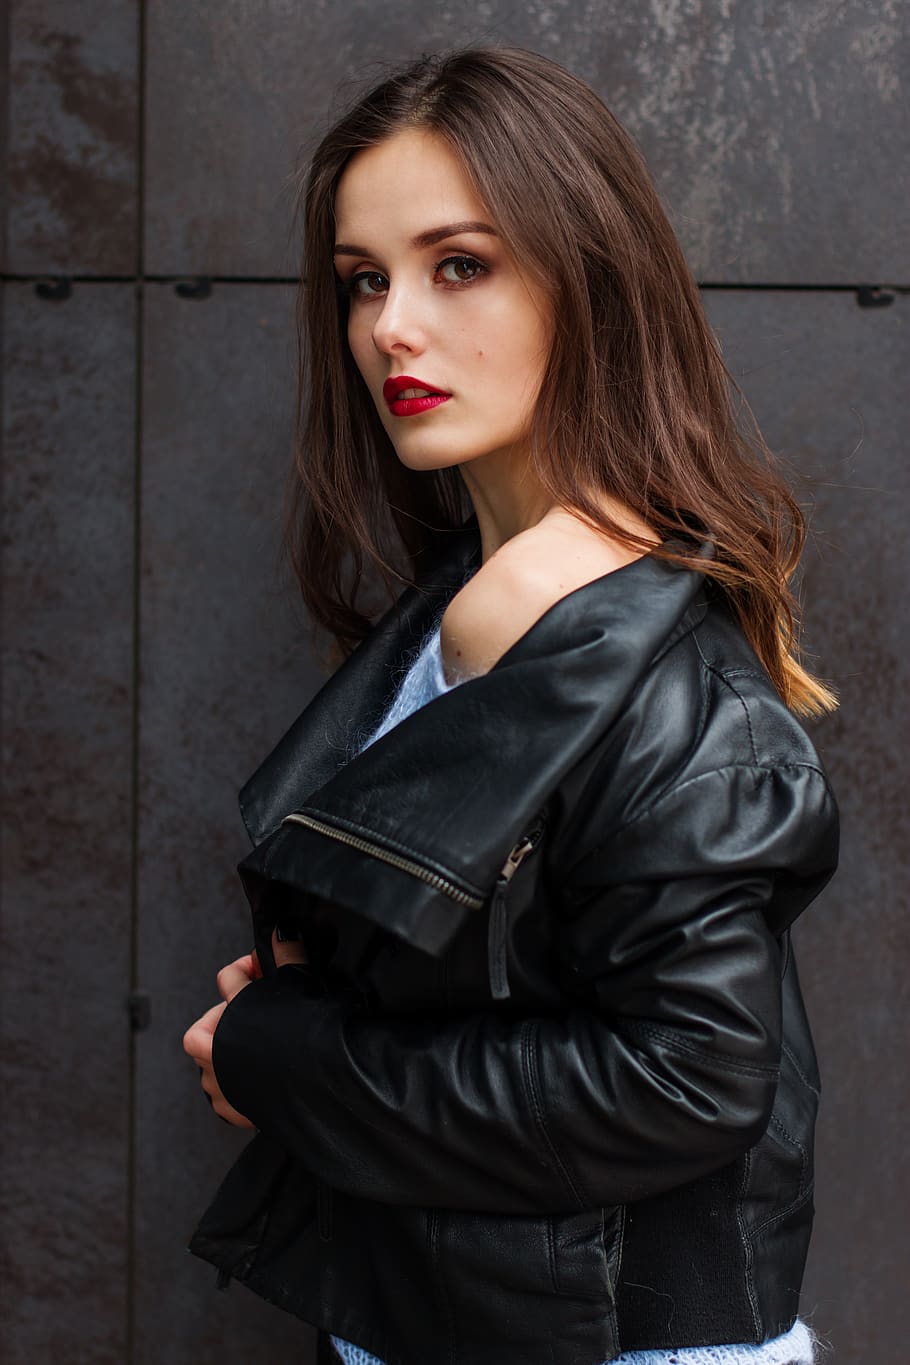 portrait, fashion, woman, young, model, style, stylish, black leather jacket, person, beautiful